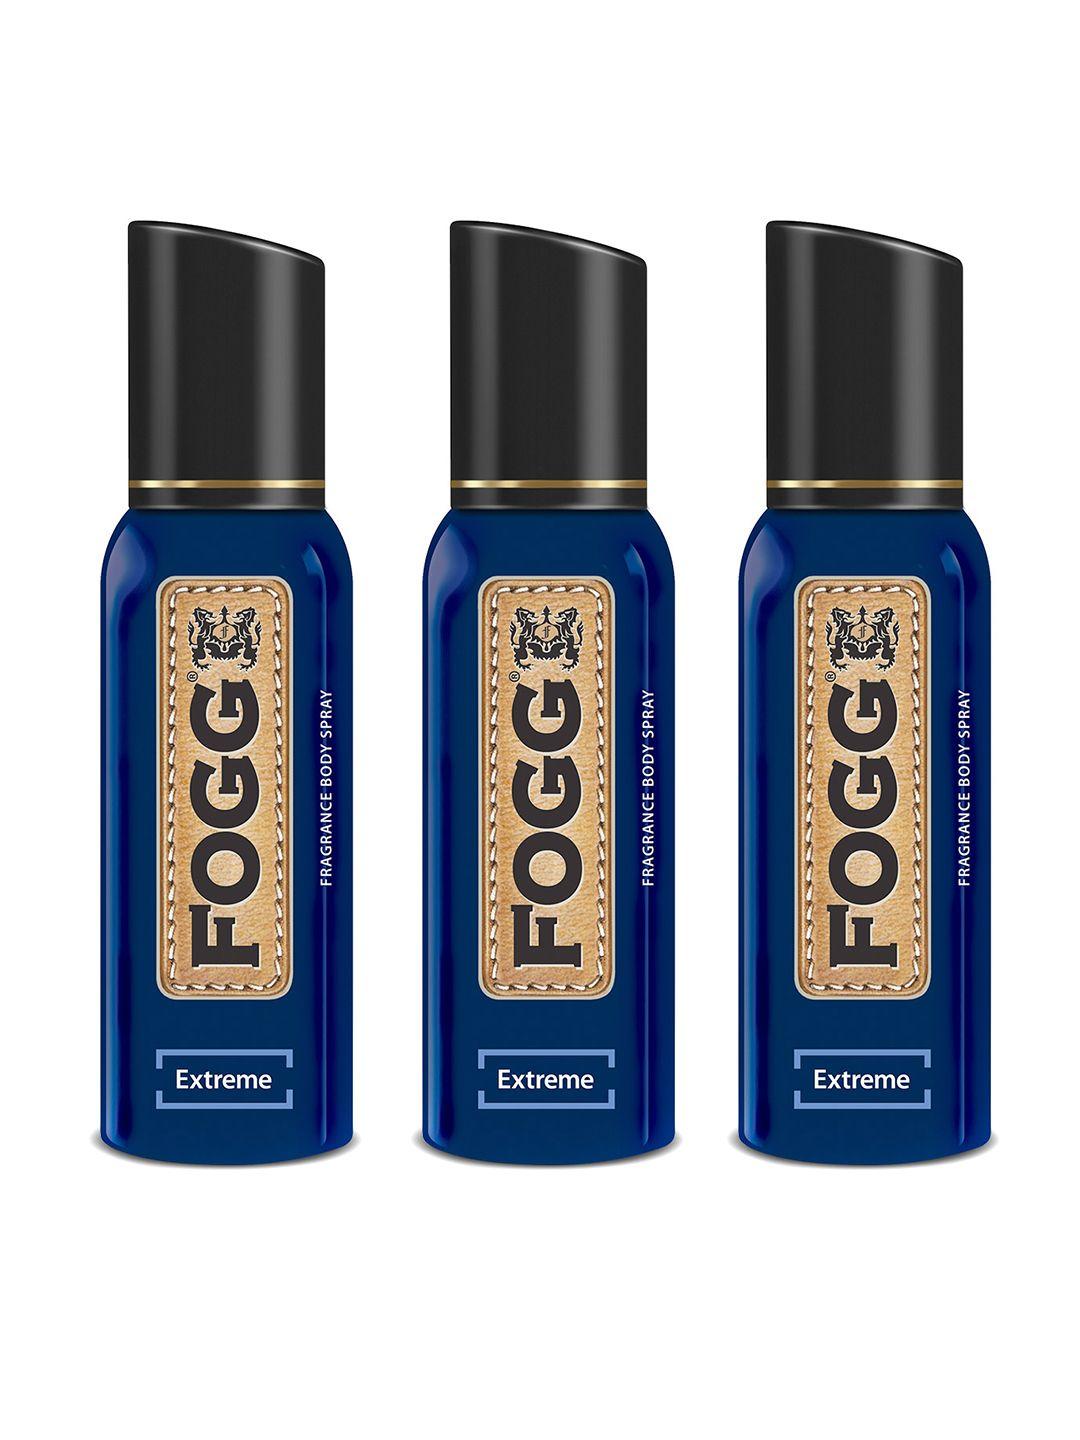 fogg set of 3 extreme fragrance body spray - 150 ml each